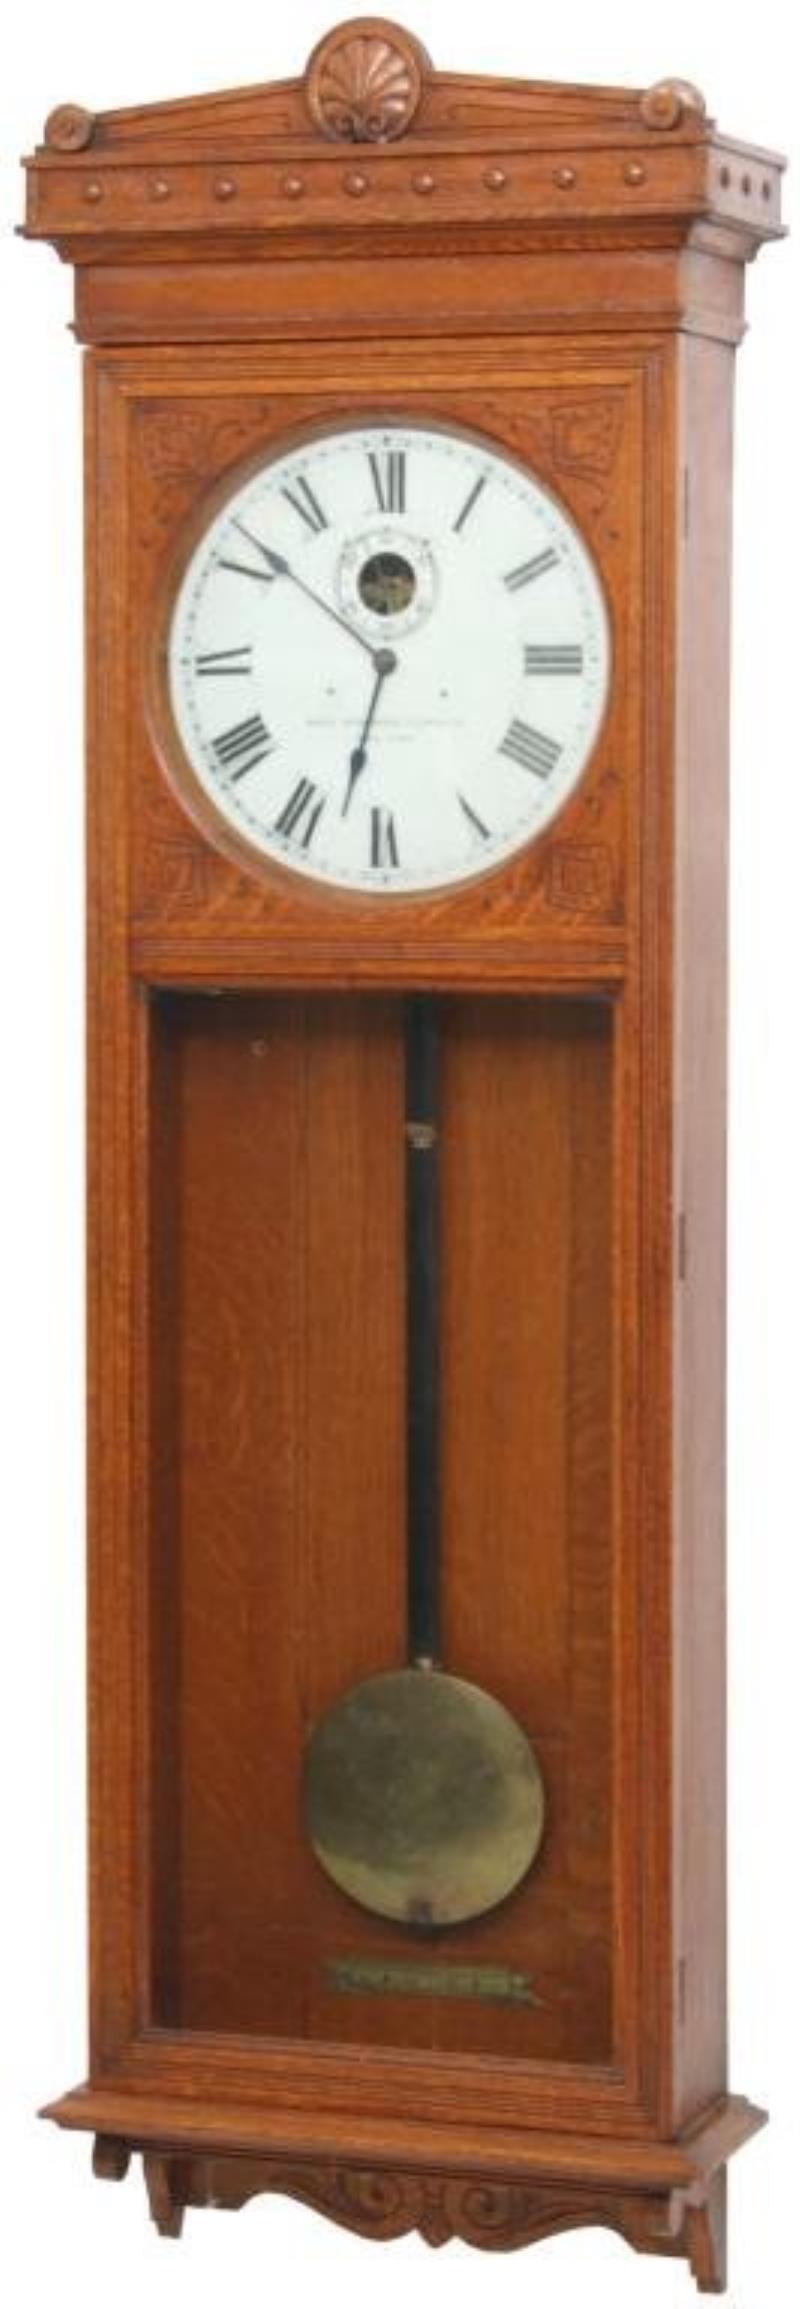 Self-Winding Clock Co. No. 9 Wall Regulator